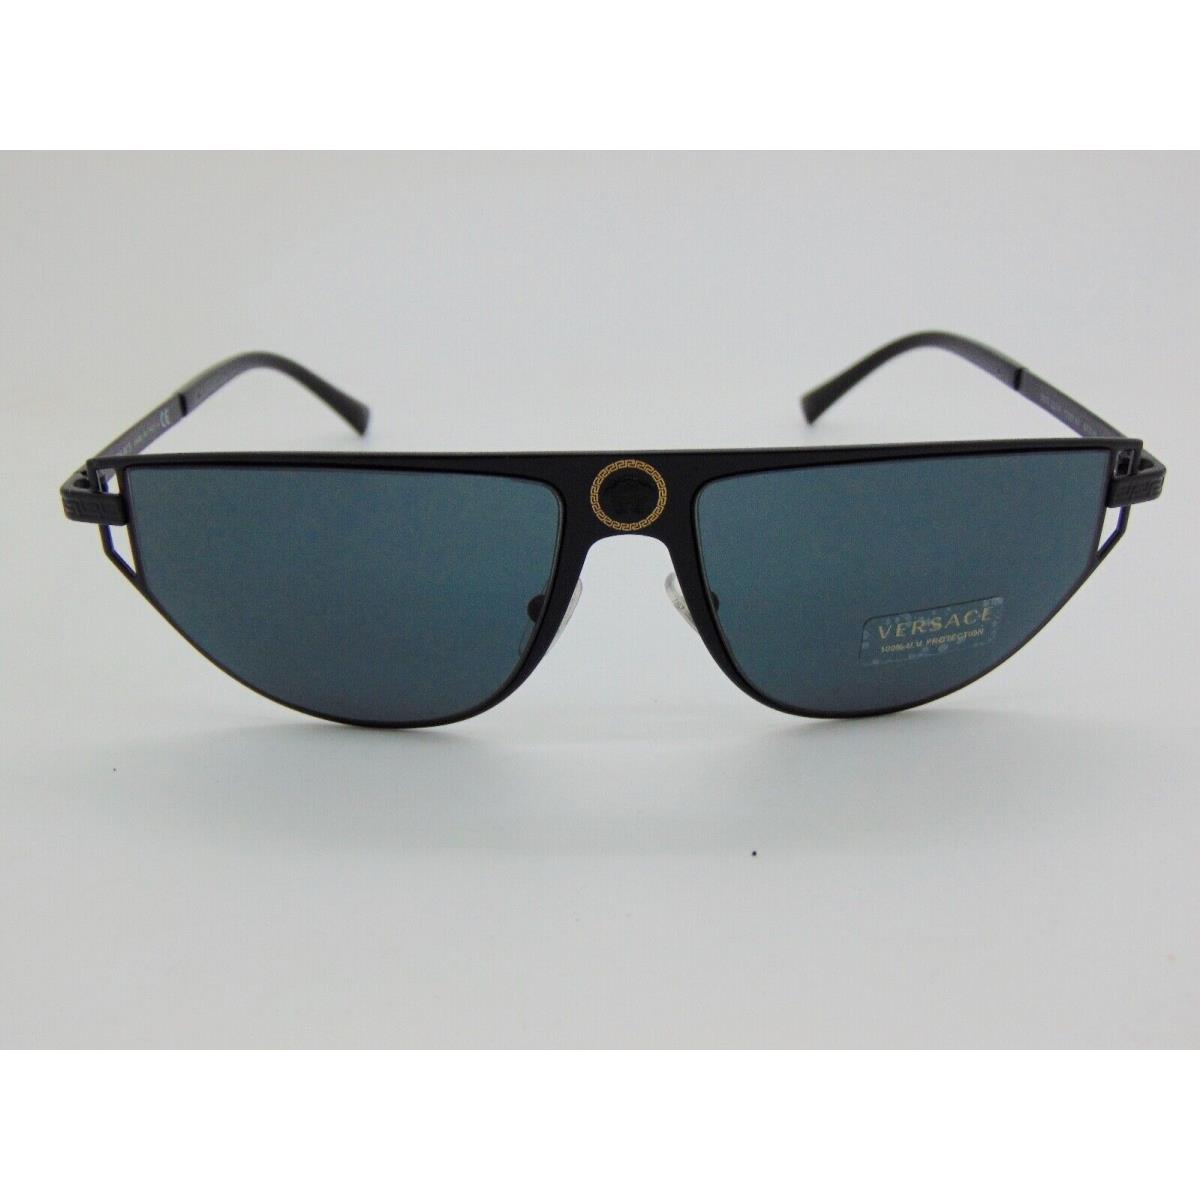 Versace sunglasses  - Matte Black Frame, Grey Lens 0